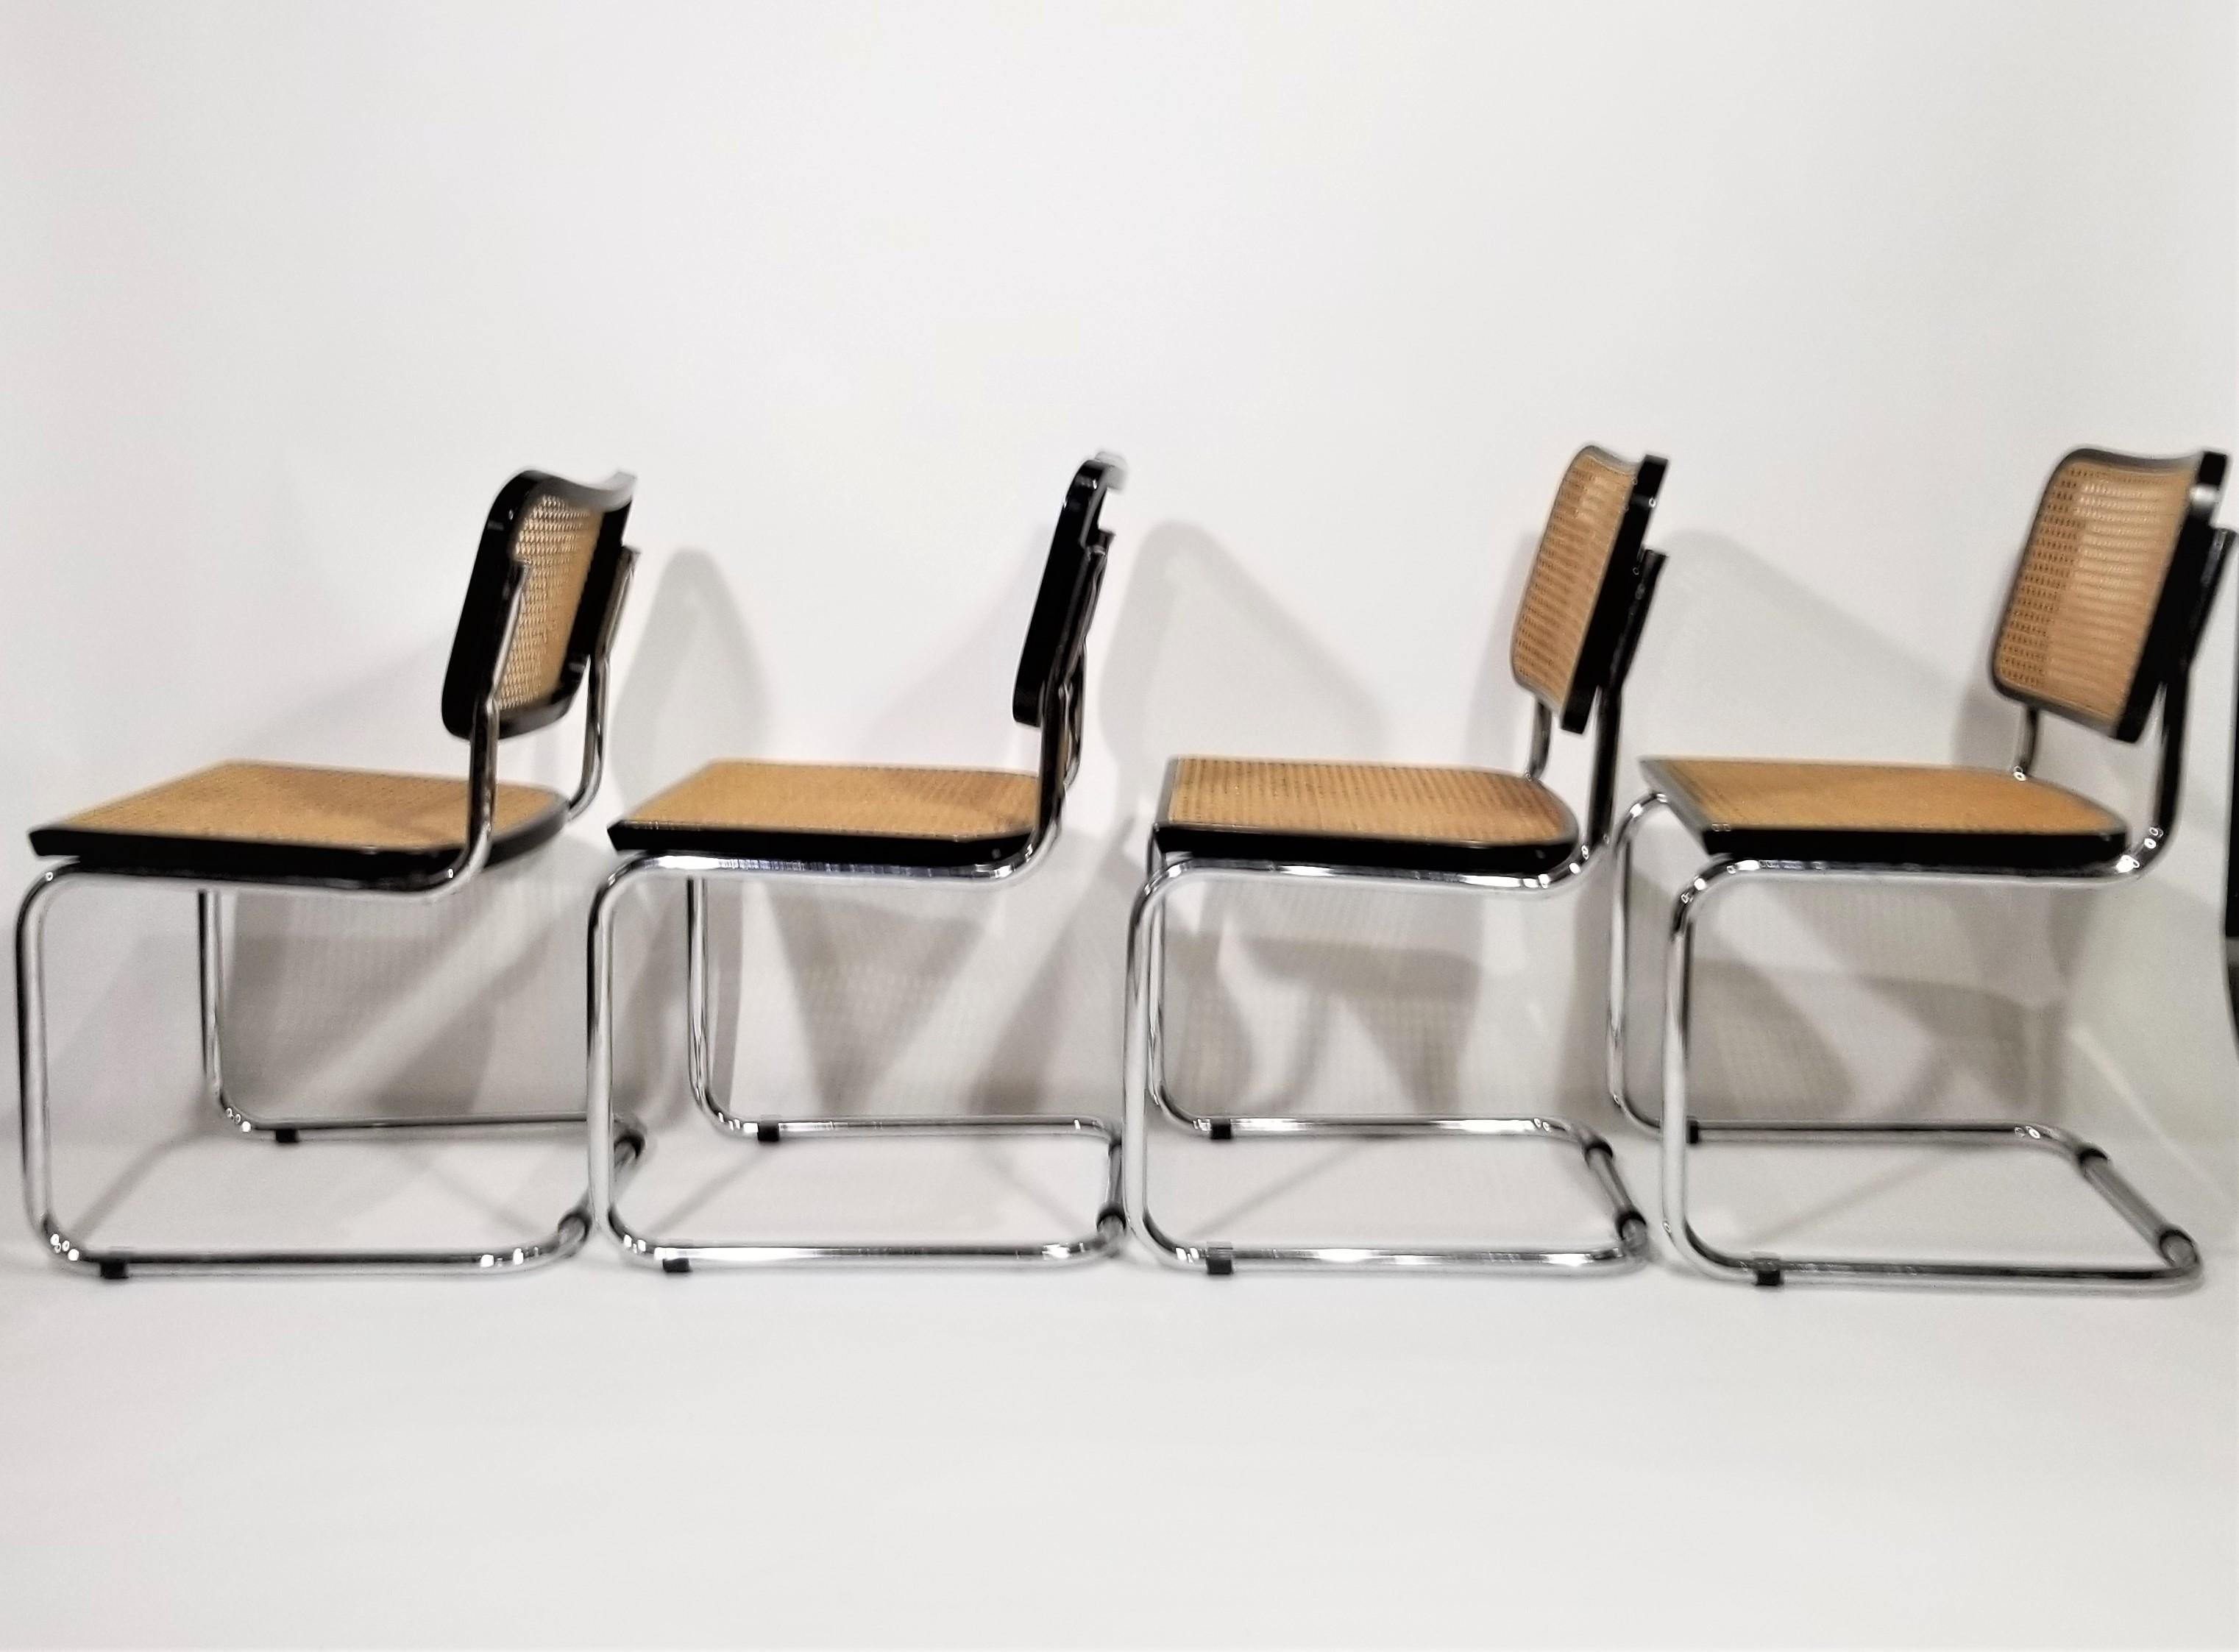 Cane Marcel Breuer Cesca Black Side Chairs 1960s Mid Century